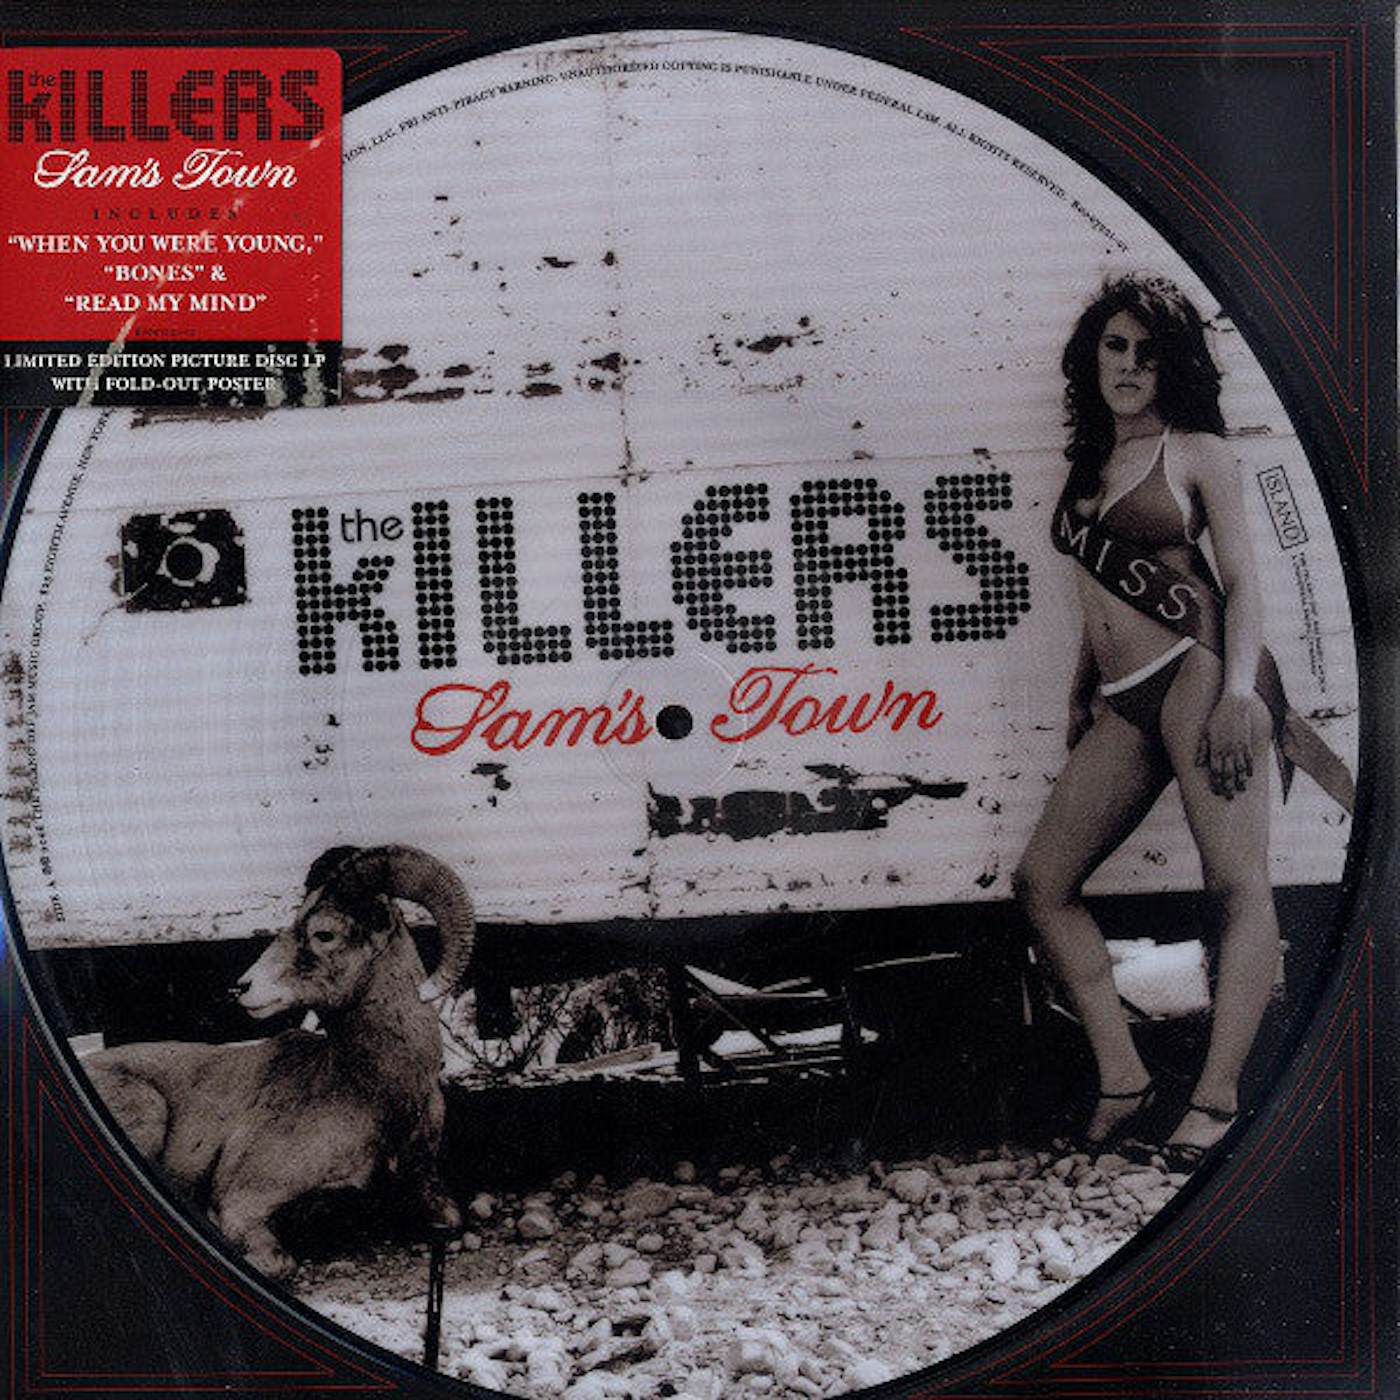 The Killers LP Vinyl Record - Sam's Town